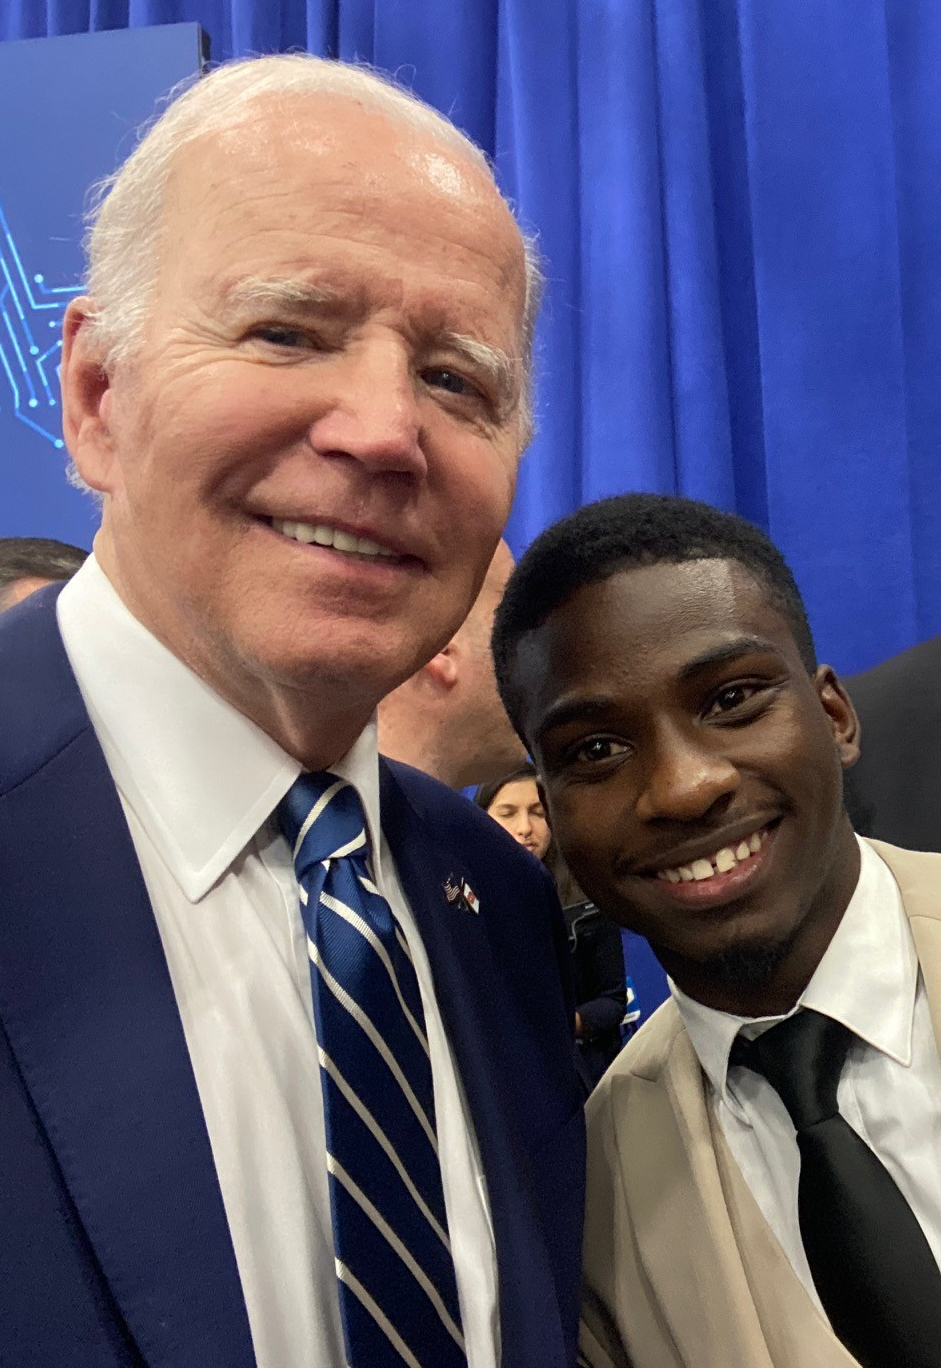 President Biden (left) took a selfie with OCC student Juhudi Boazi (right).